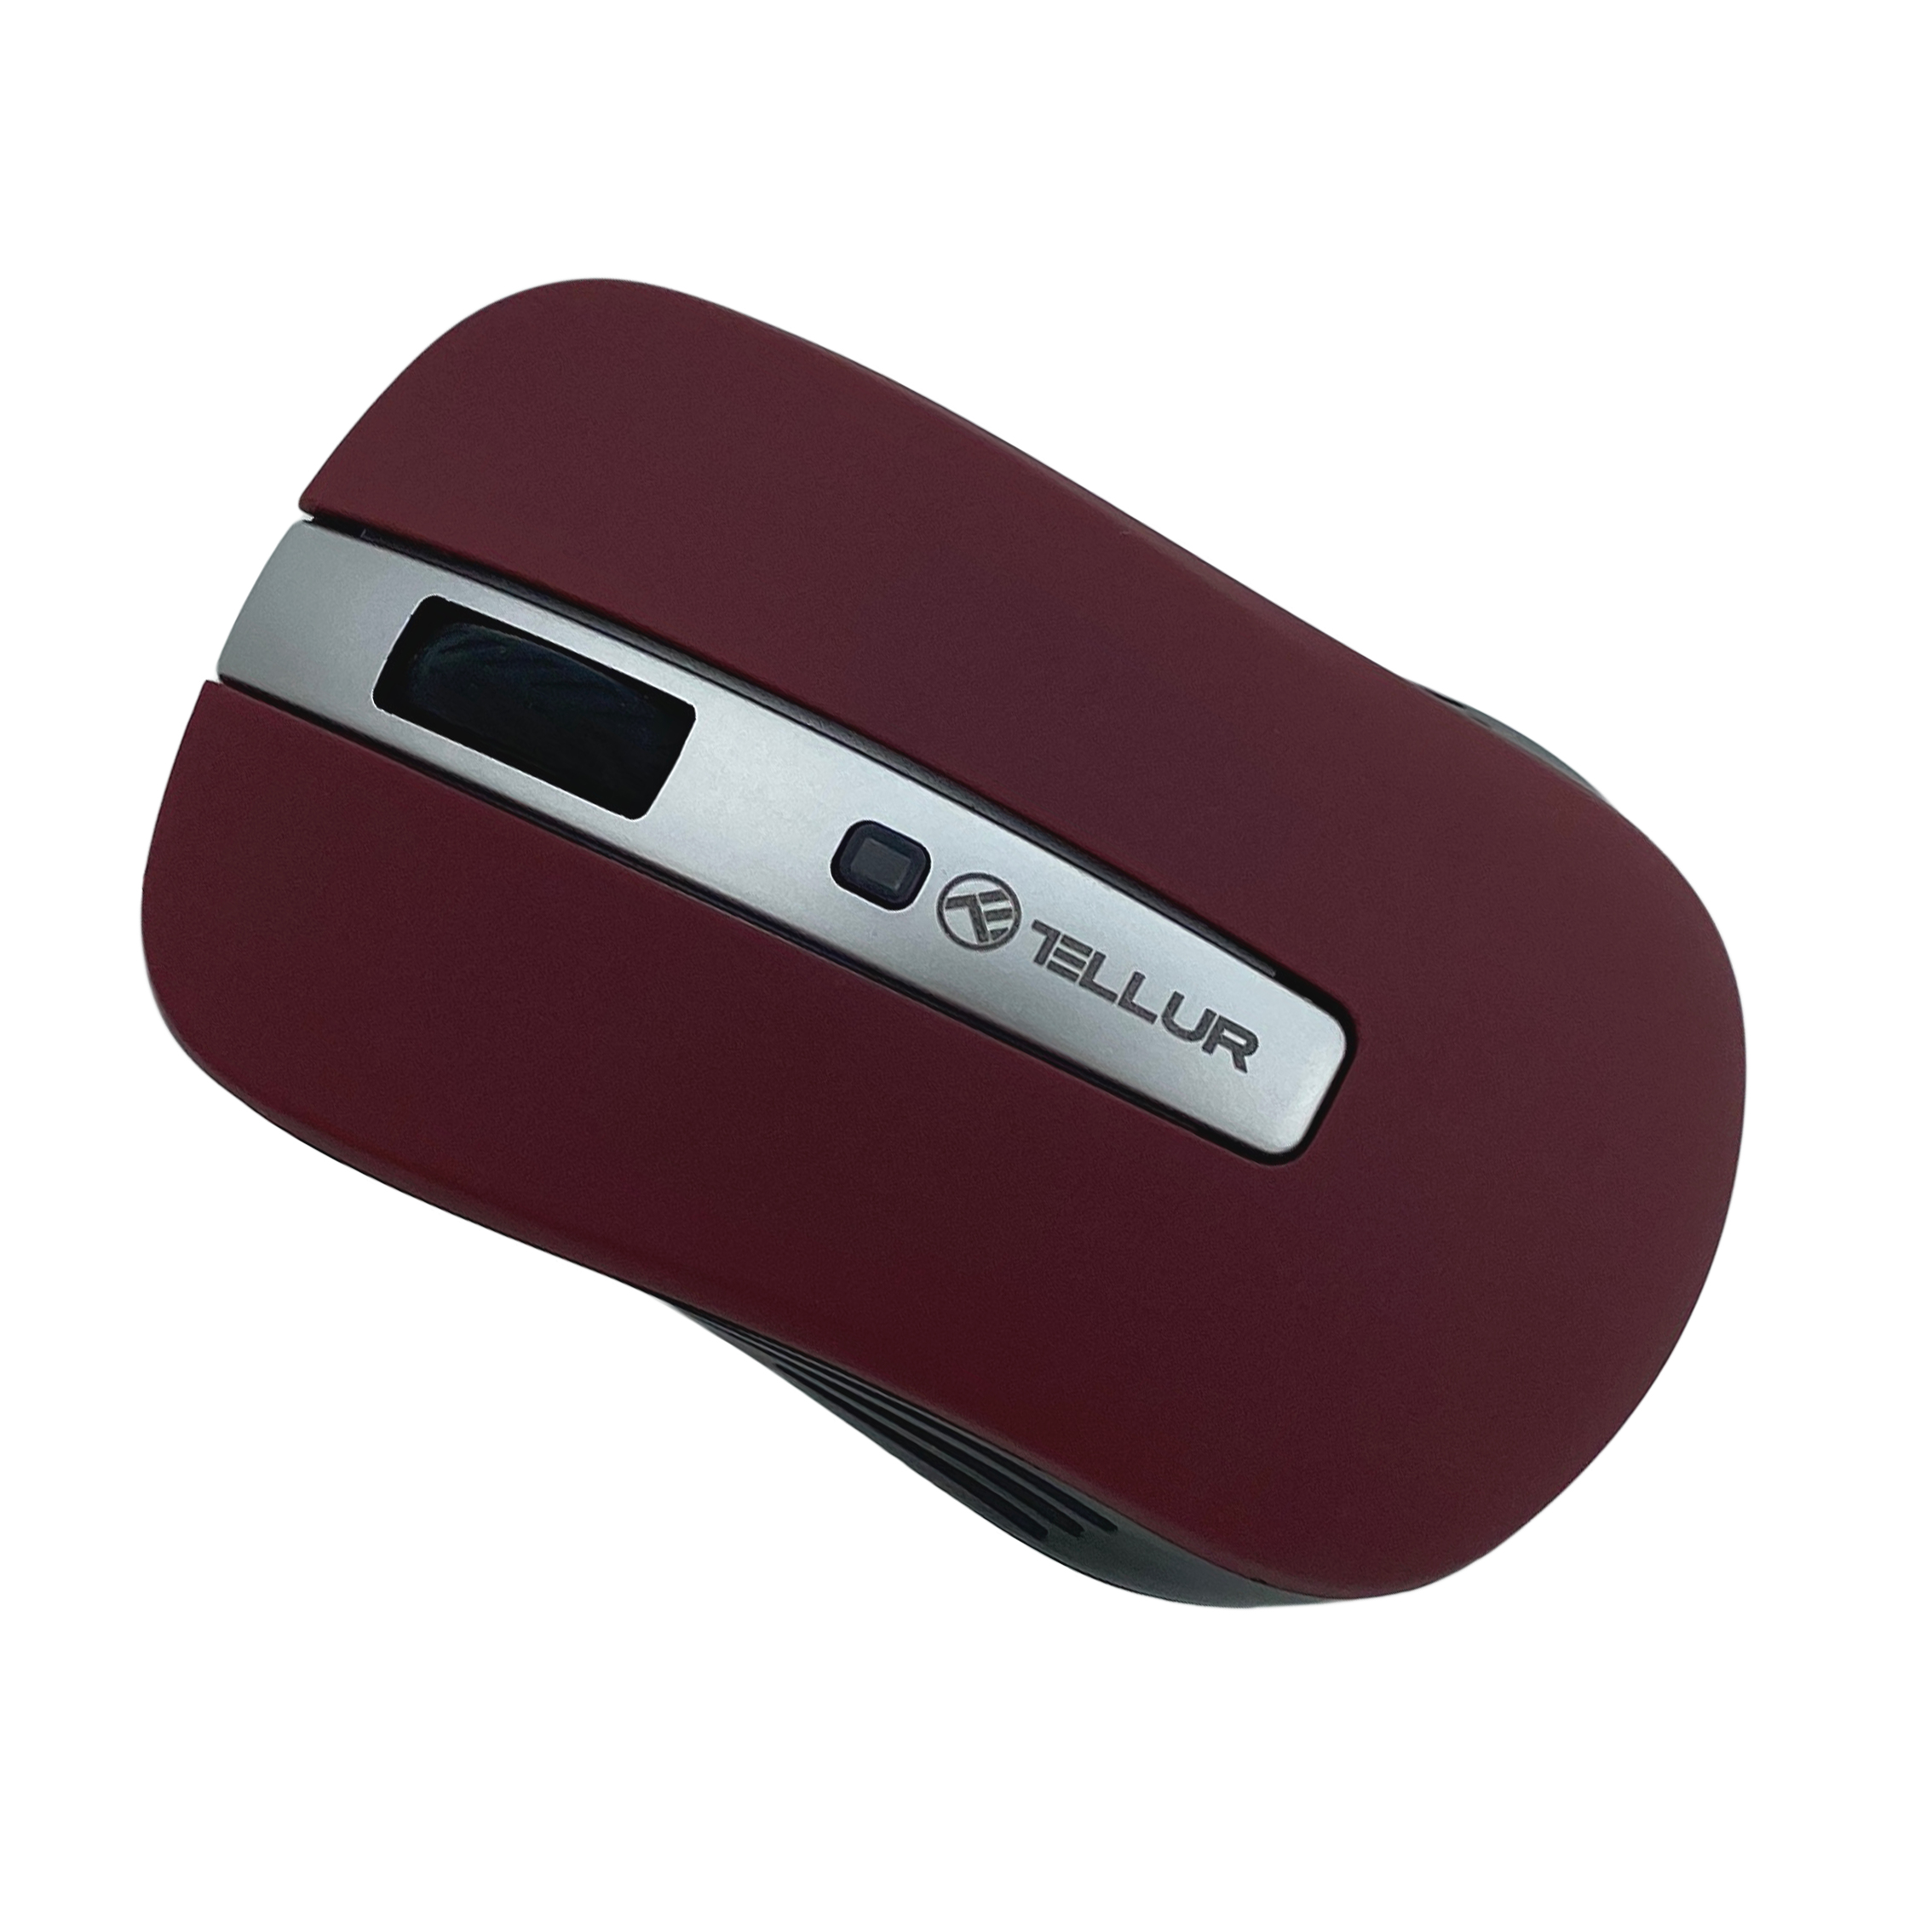 Mouse Wireless Tellur Basic, Plug and Play, LED, 800-1600 DPI reglabil, 4 Butoane, Rosu Inchis (închis) imagine Black Friday 2021